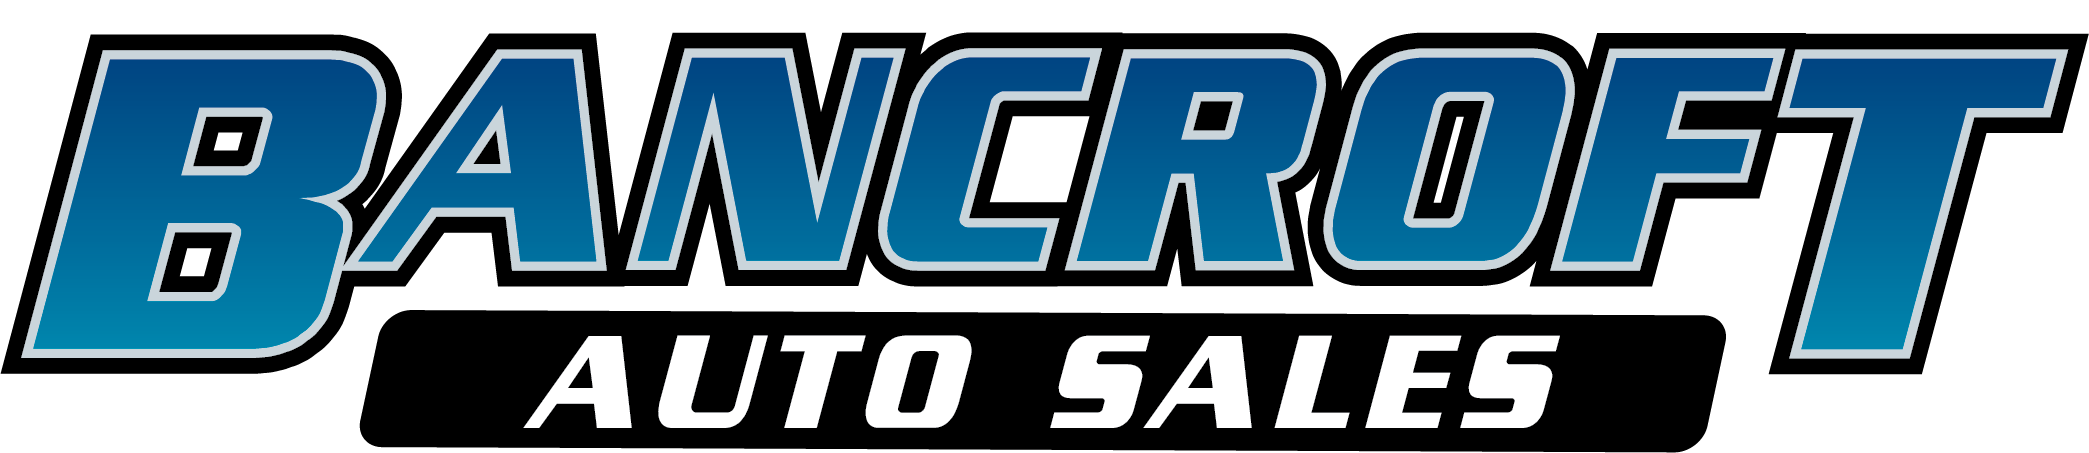 Bancroft Auto Sales, LLC